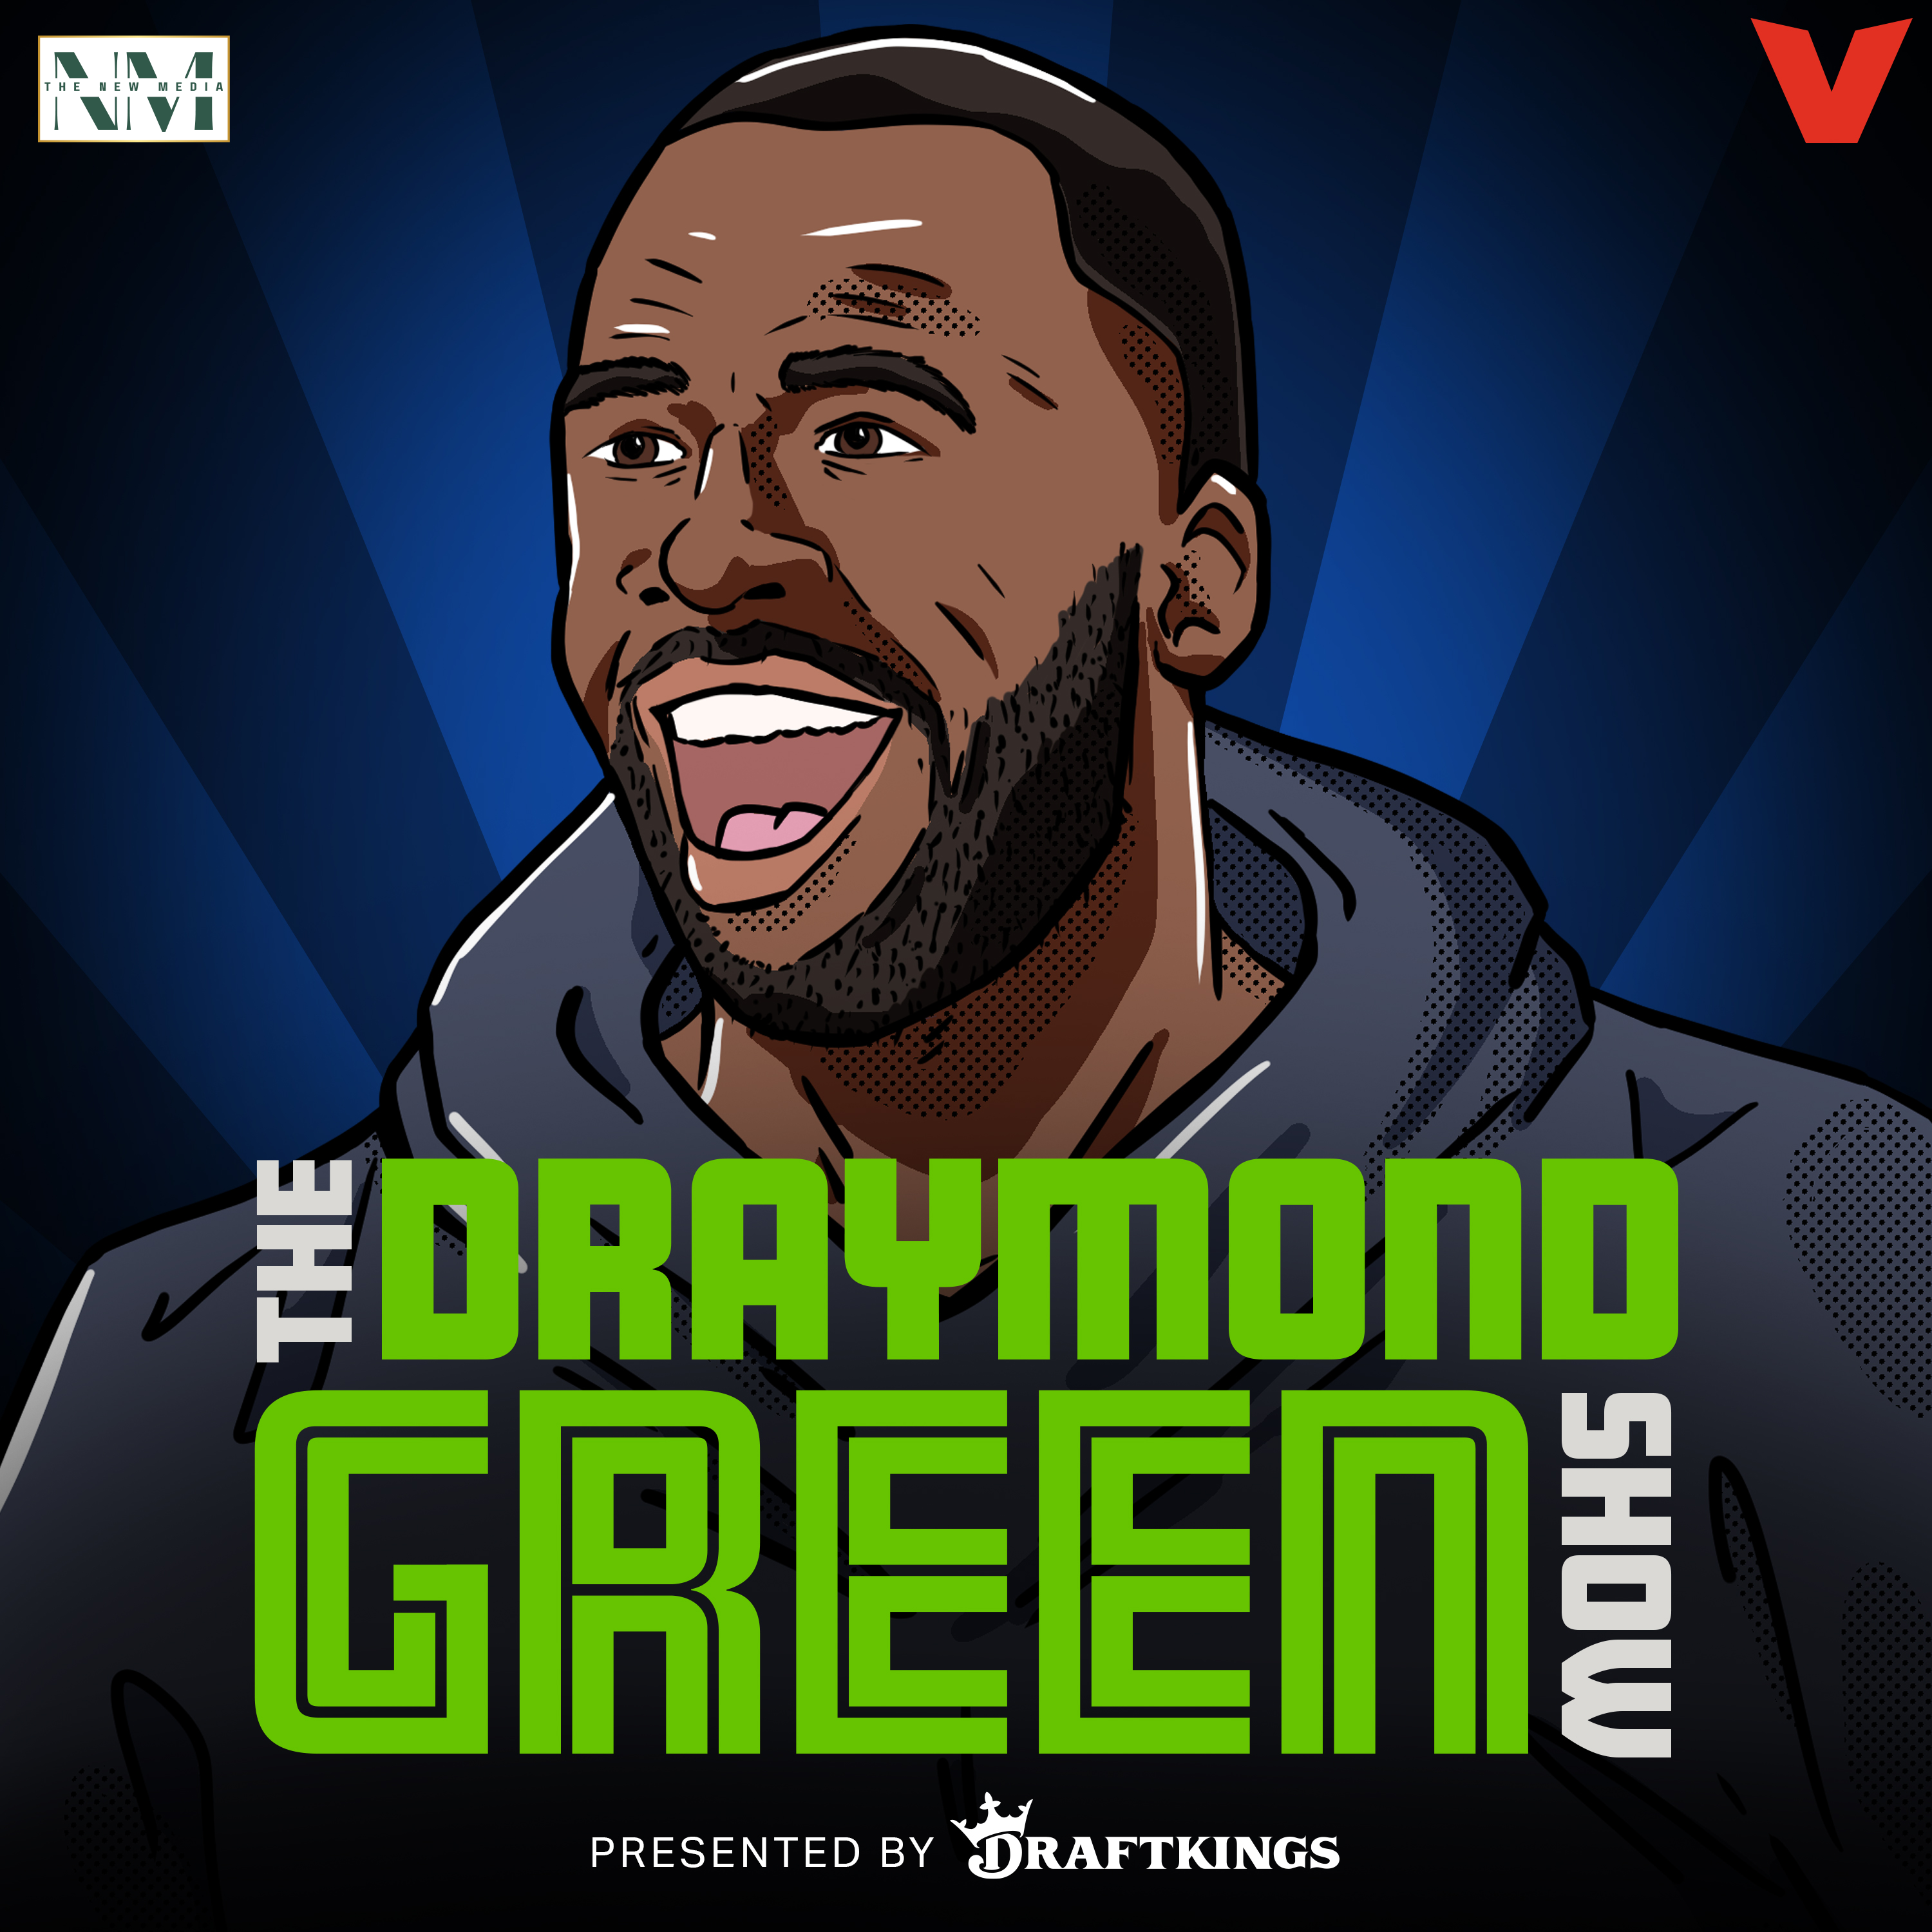 Draymond Green Show - Jamal Crawford Returns